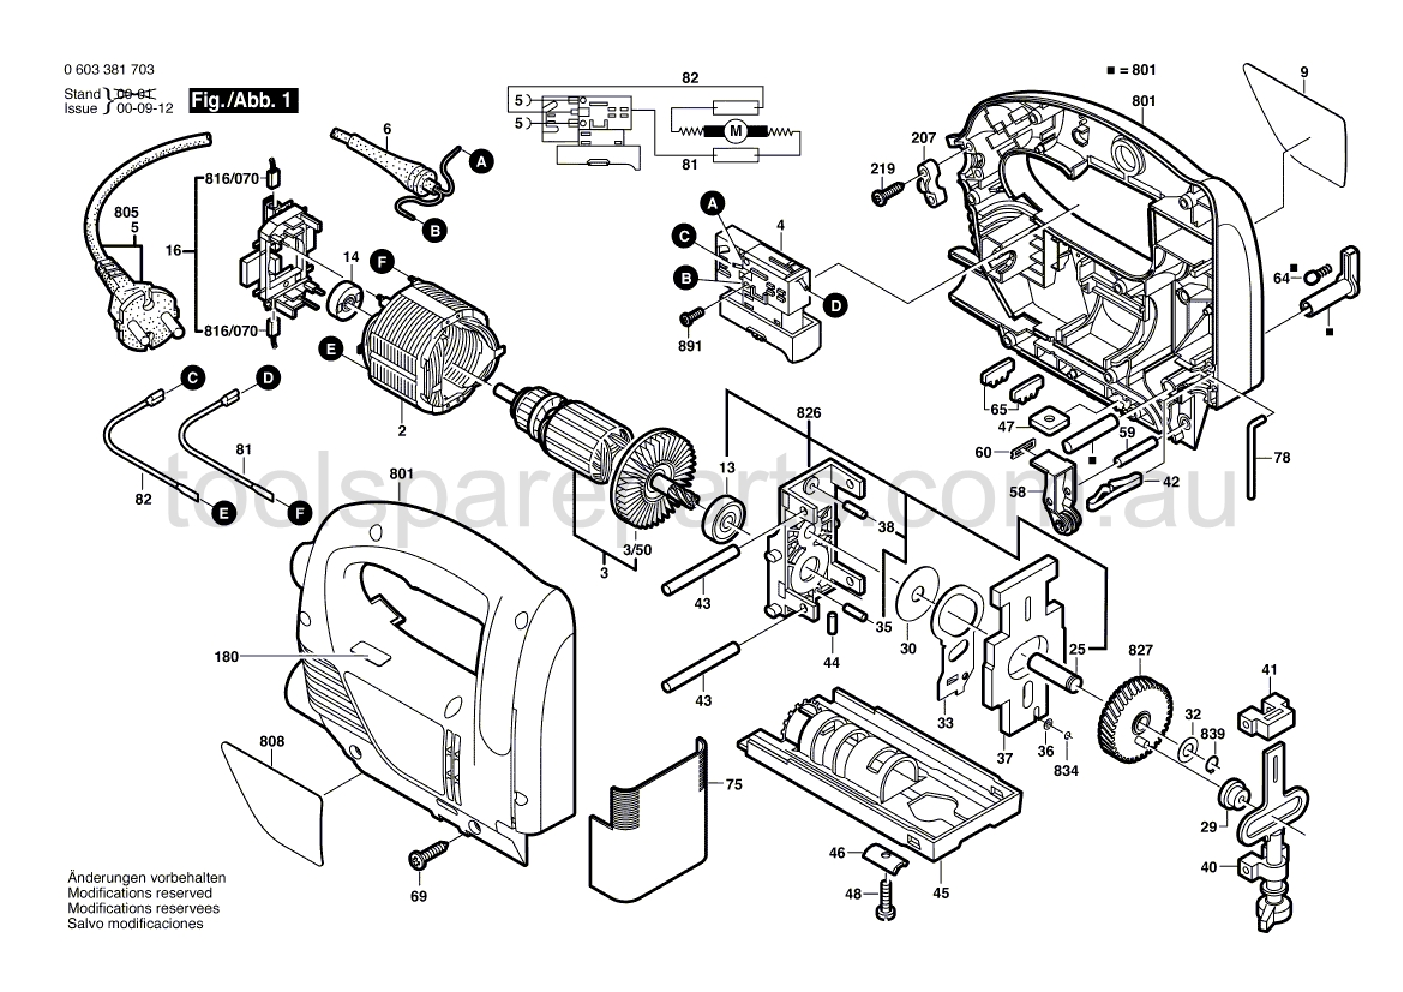 Bosch PST 650 PE 0603381737 Spare Parts